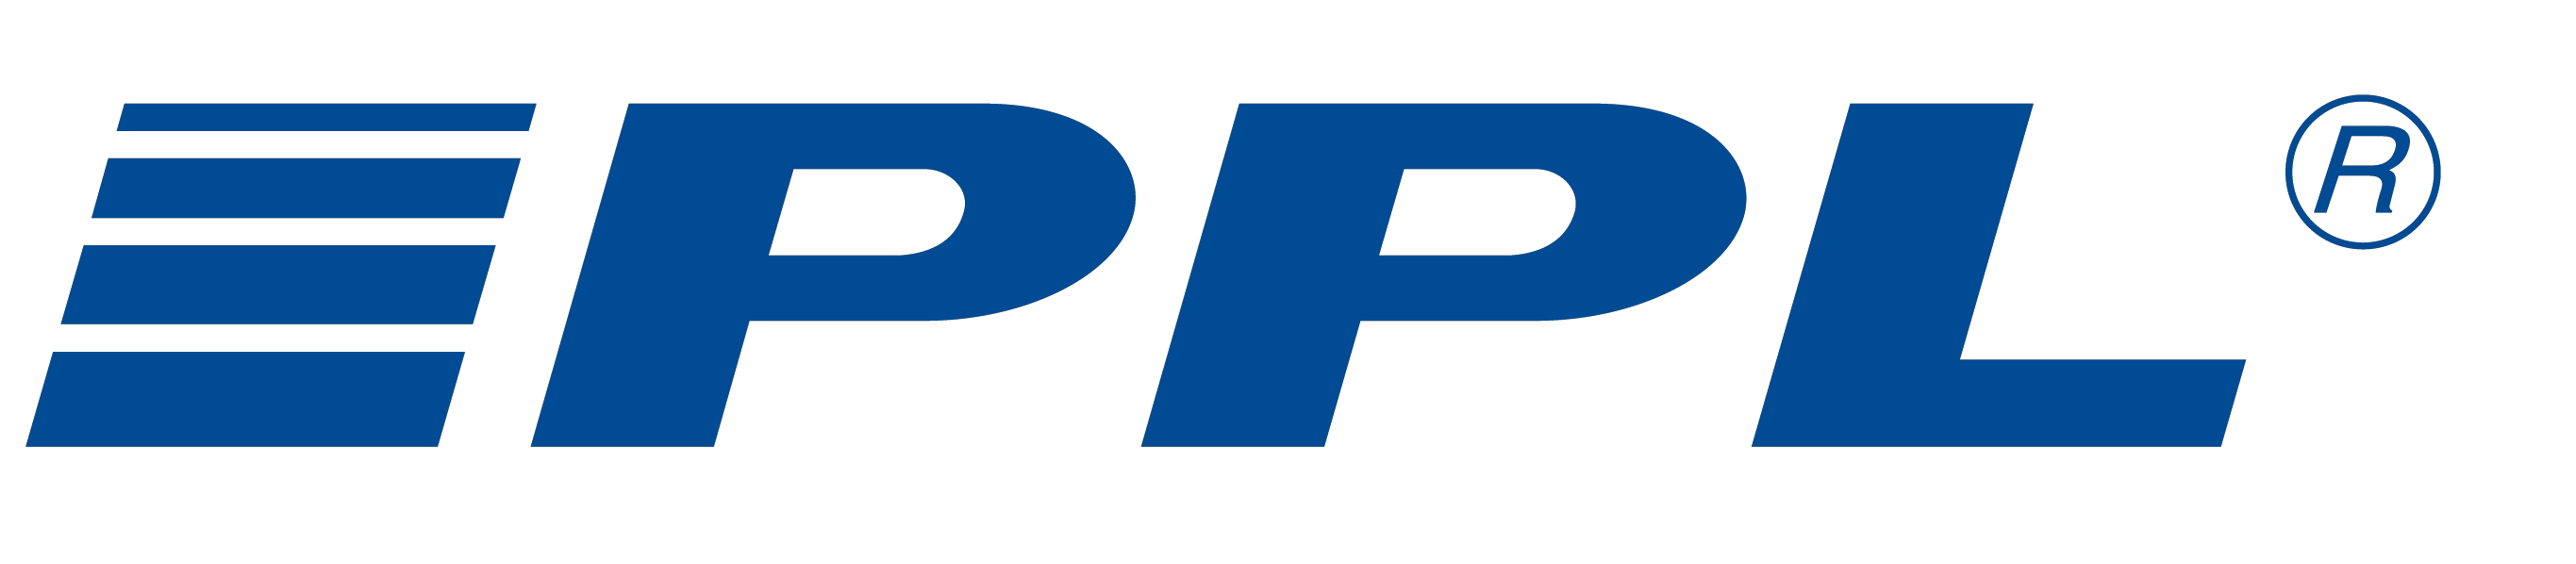 PPL-logo-fixni-vedle-svetlybg-rgb_1